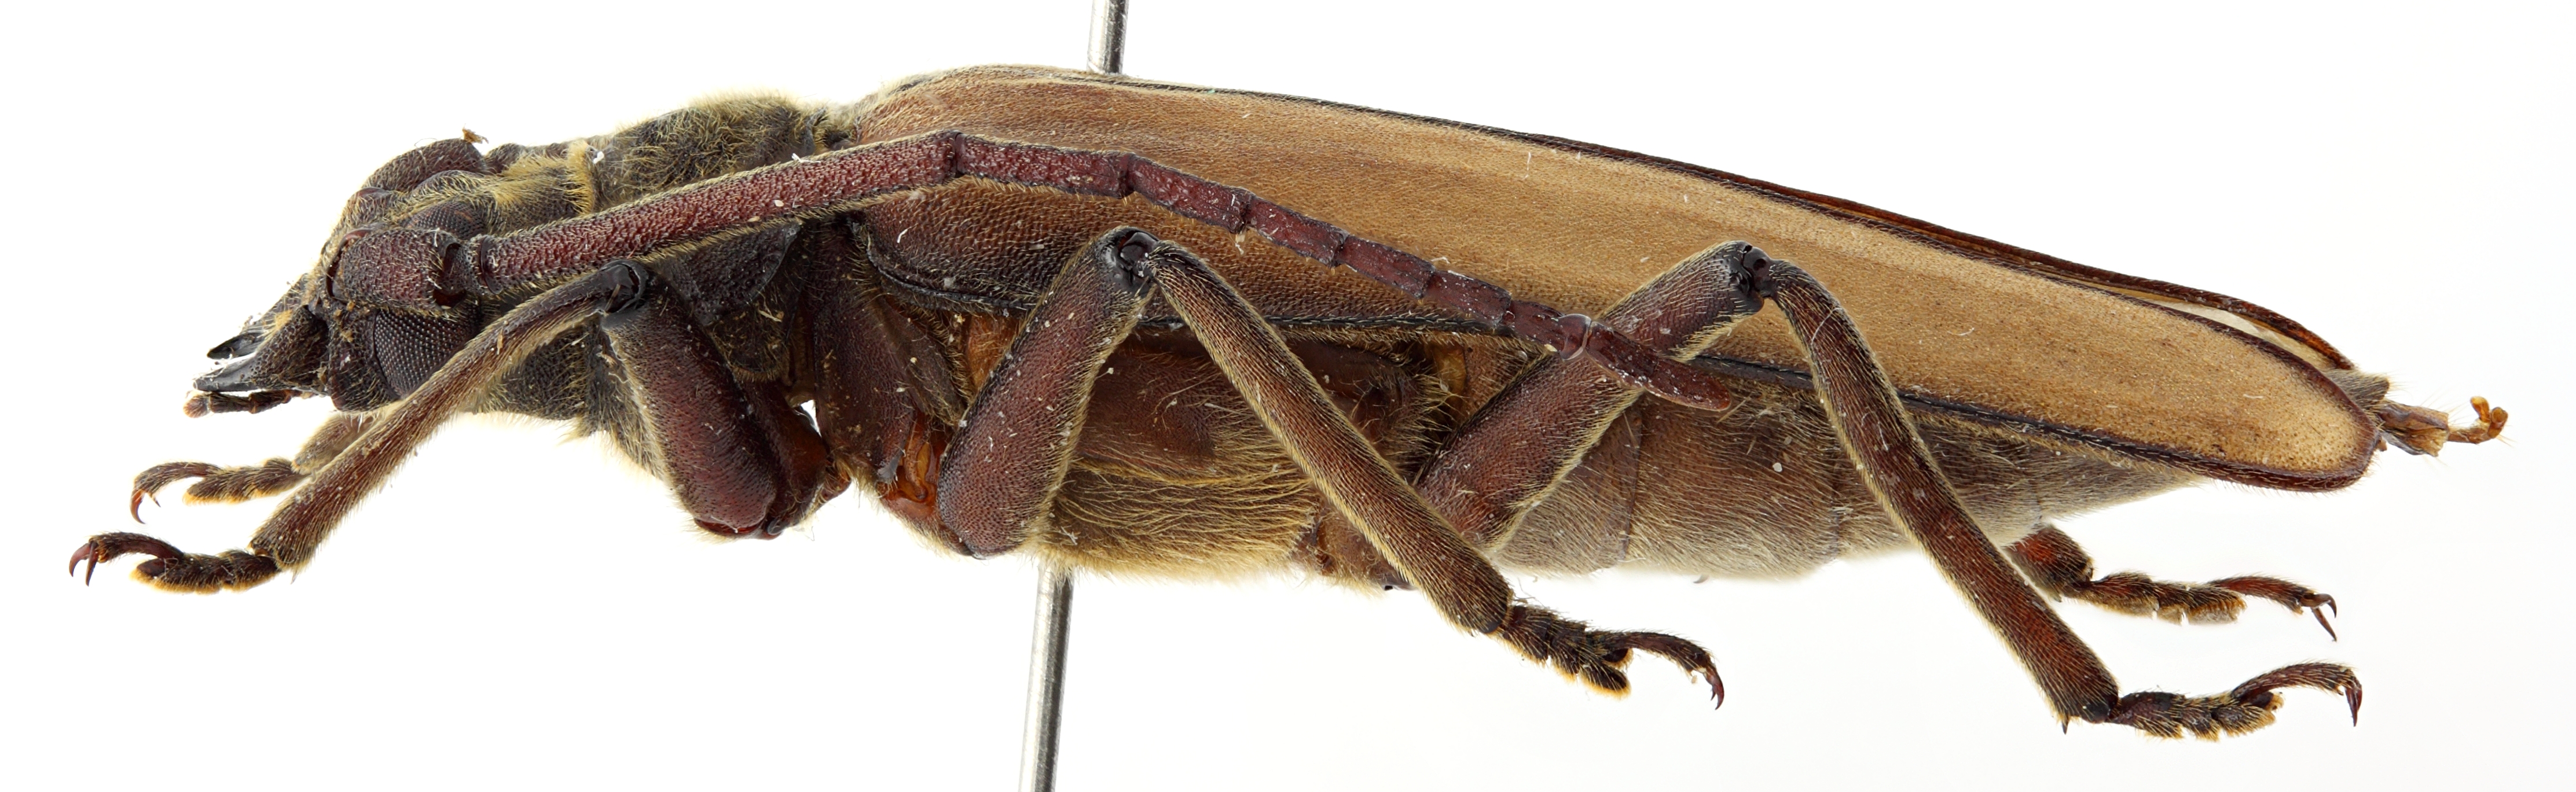 Spinimegopis curticornis 01 BL Holotype F 032 BRUS 201405.jpg